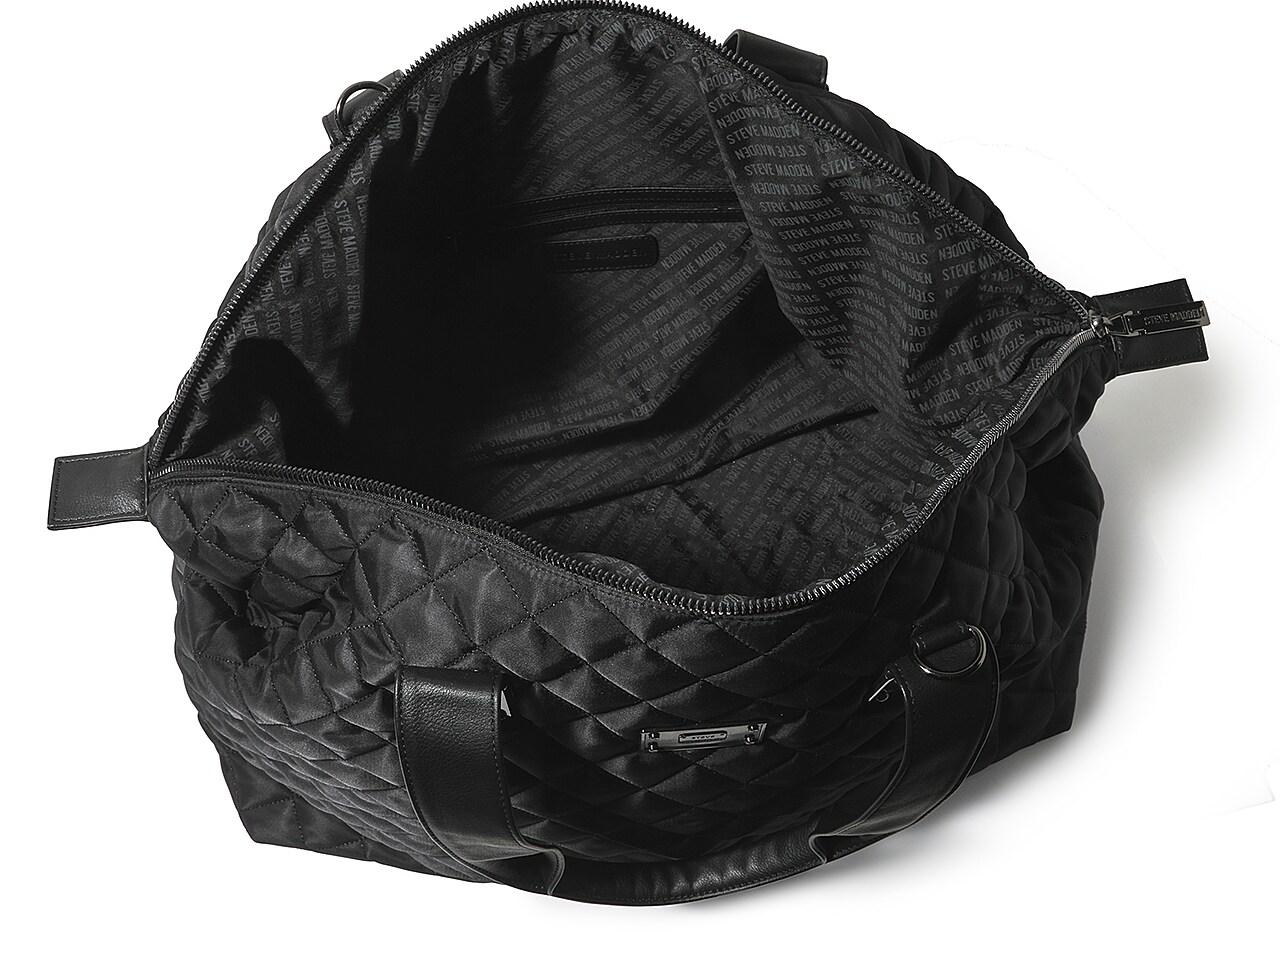 Steve Madden black large weekender quilted travel bag - $48 - From Renata